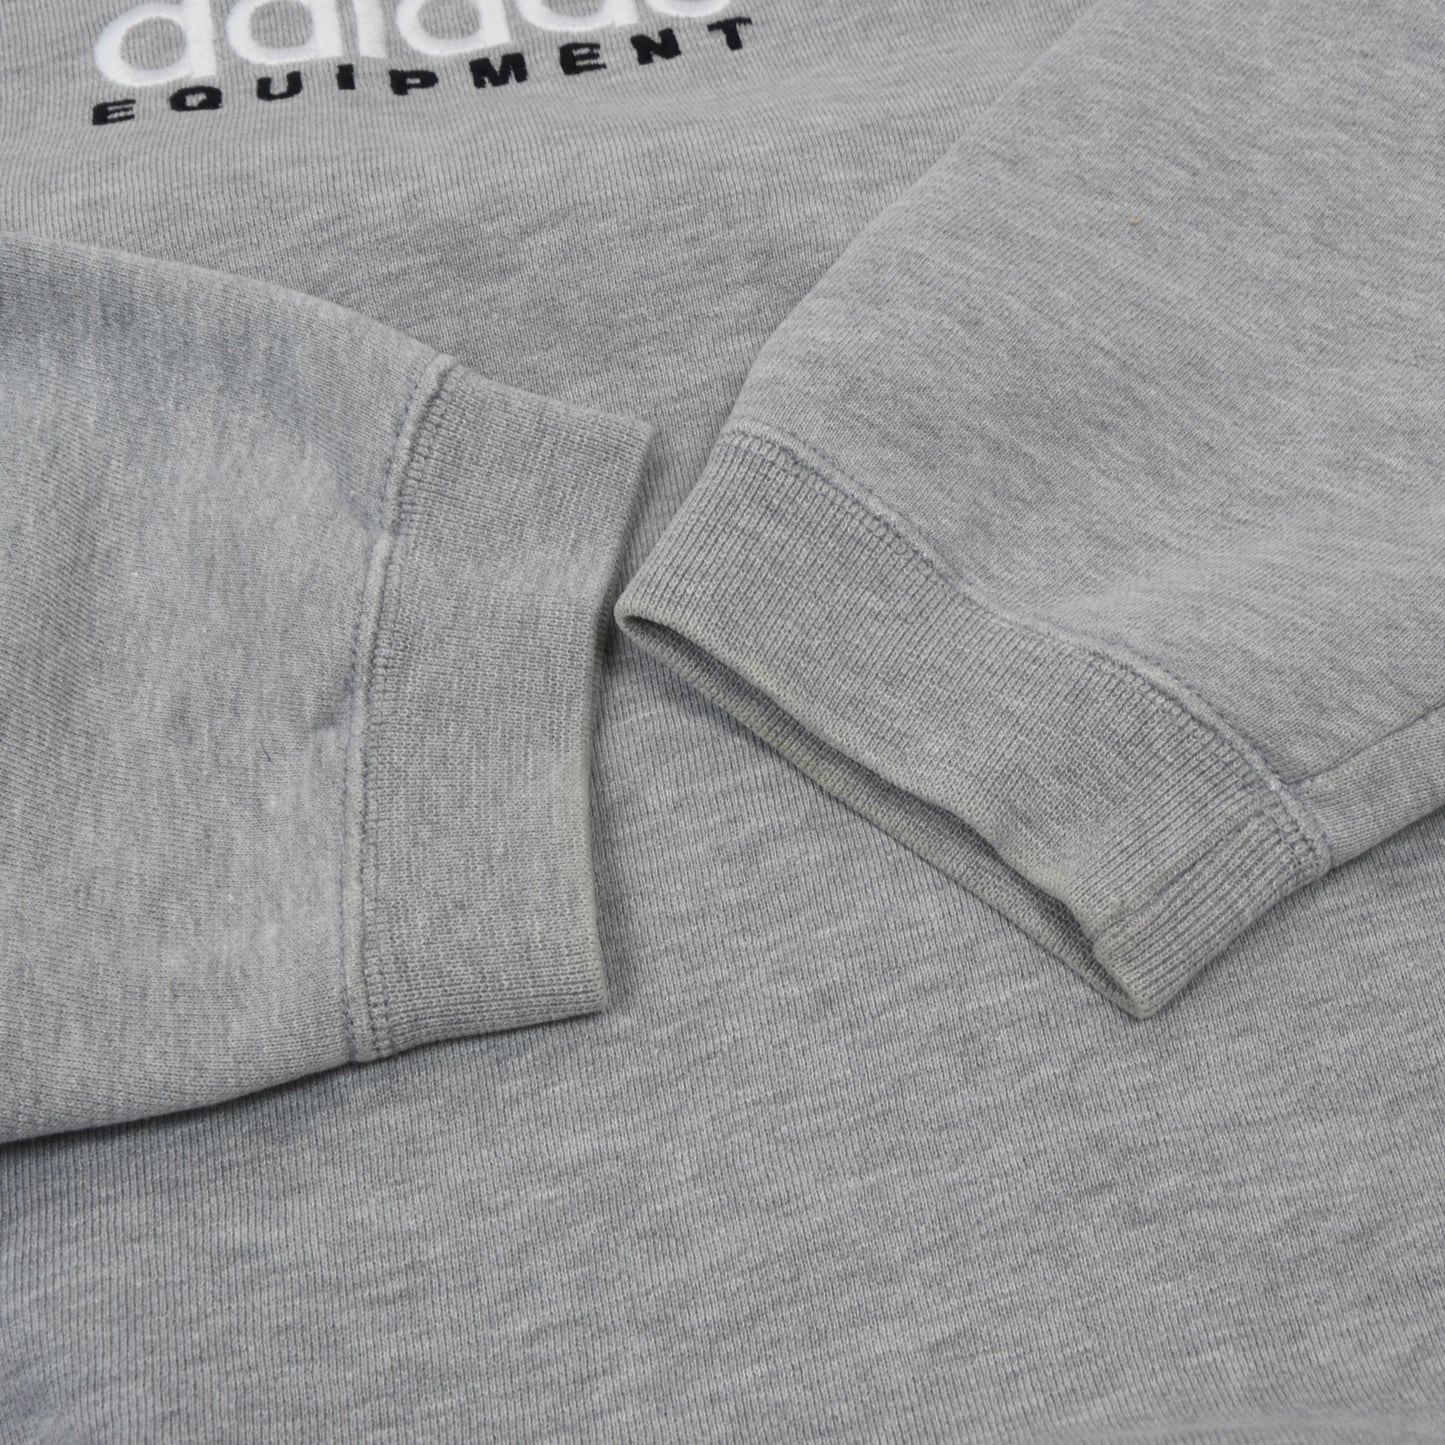 Vintage Adidas Equipment Sweatshirt Size D10 - Grey